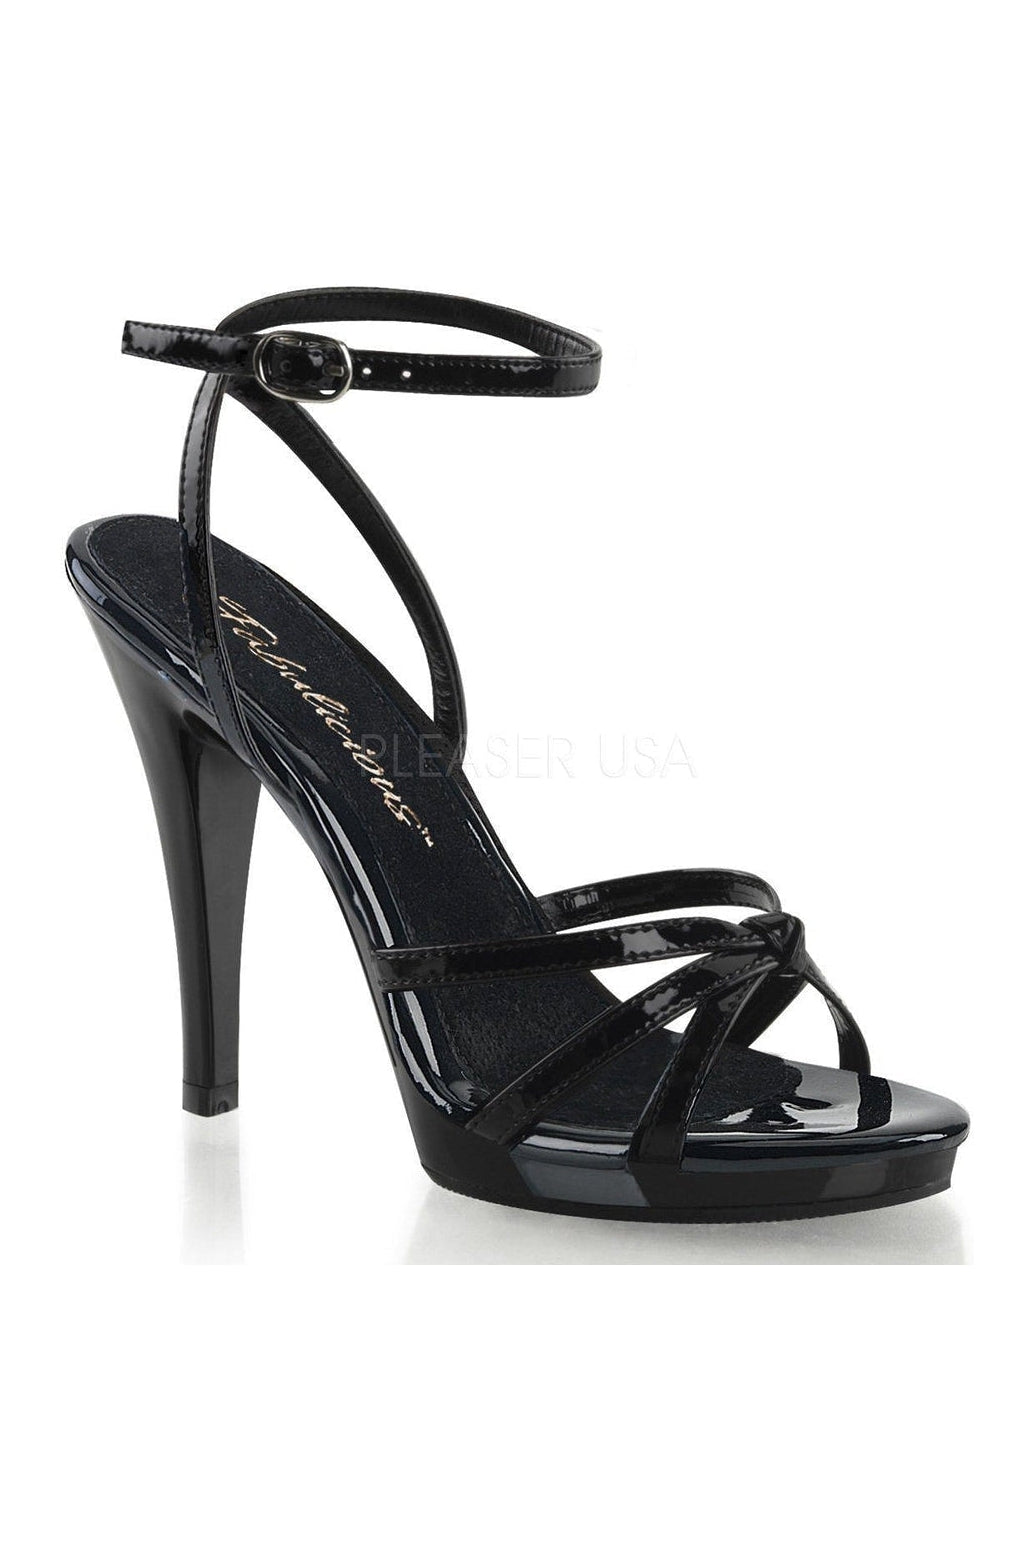 FLAIR-436 Sandal | Black Patent-Fabulicious-Black-Sandals-SEXYSHOES.COM